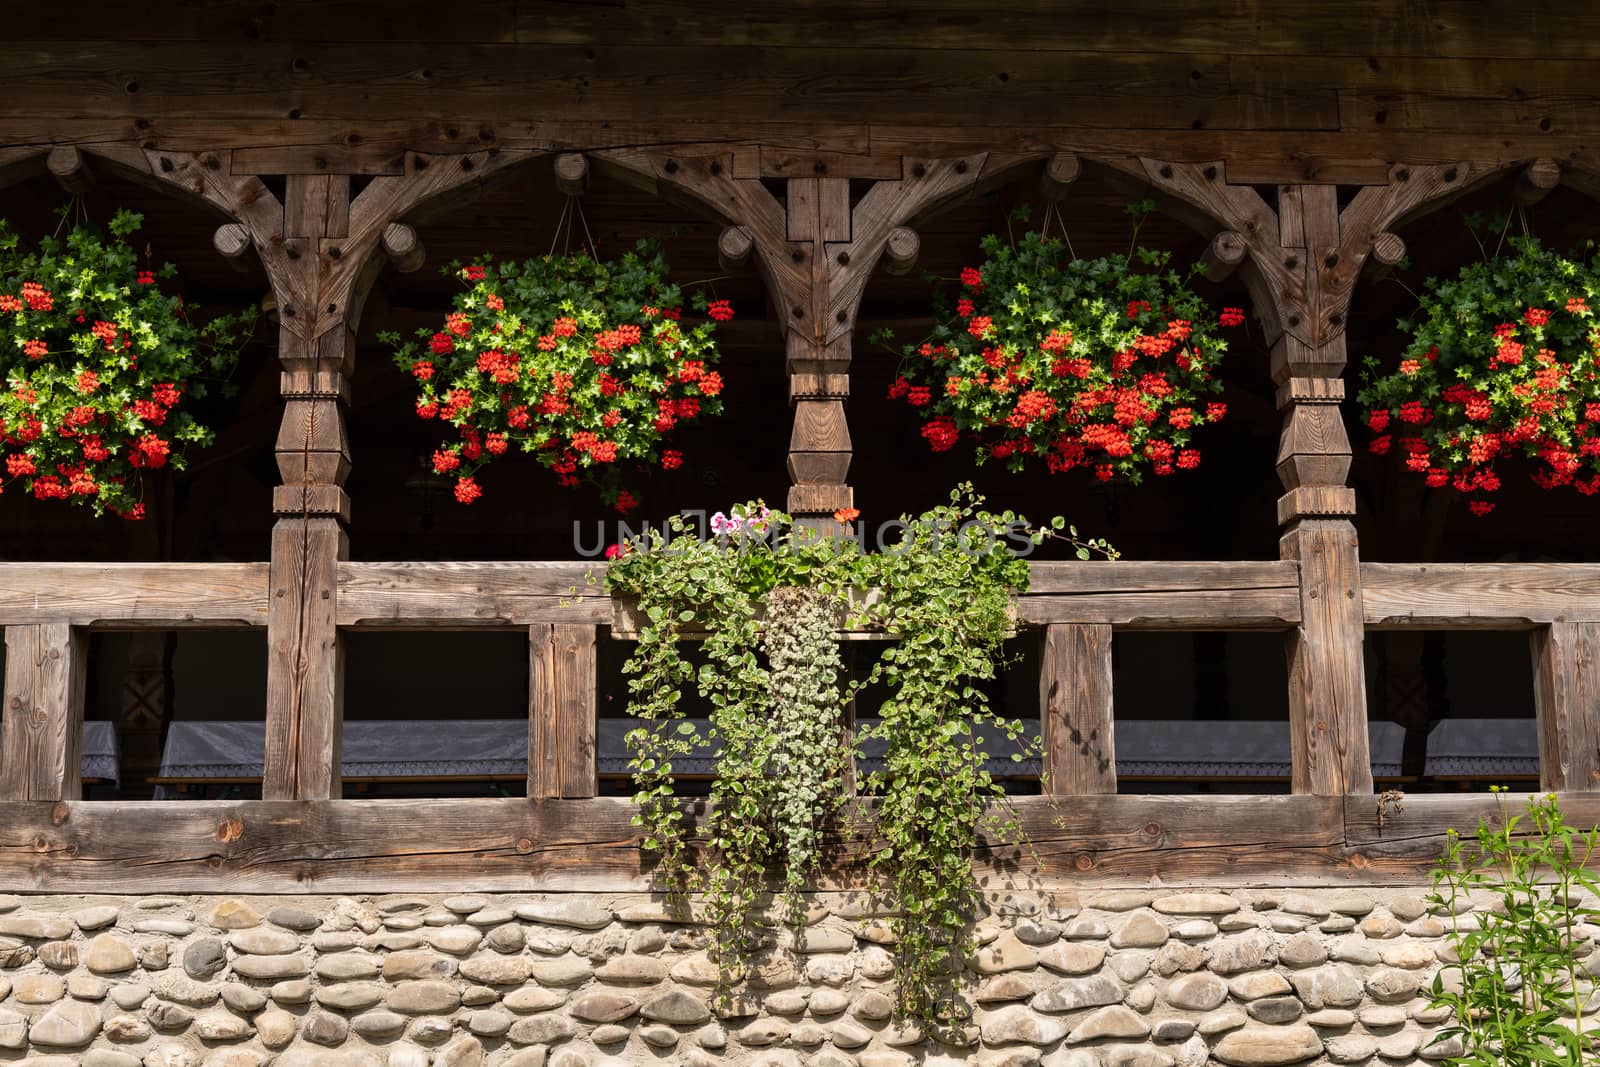 Barsana Monastery Architectural Detail - Balcony with Flowers(Maramures, Romania).